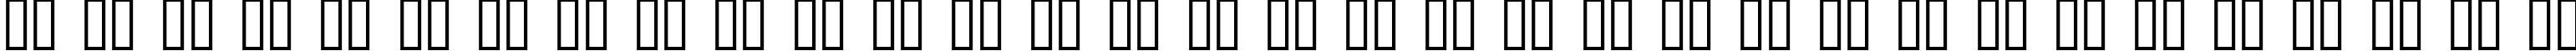 Пример написания русского алфавита шрифтом Ultraworld